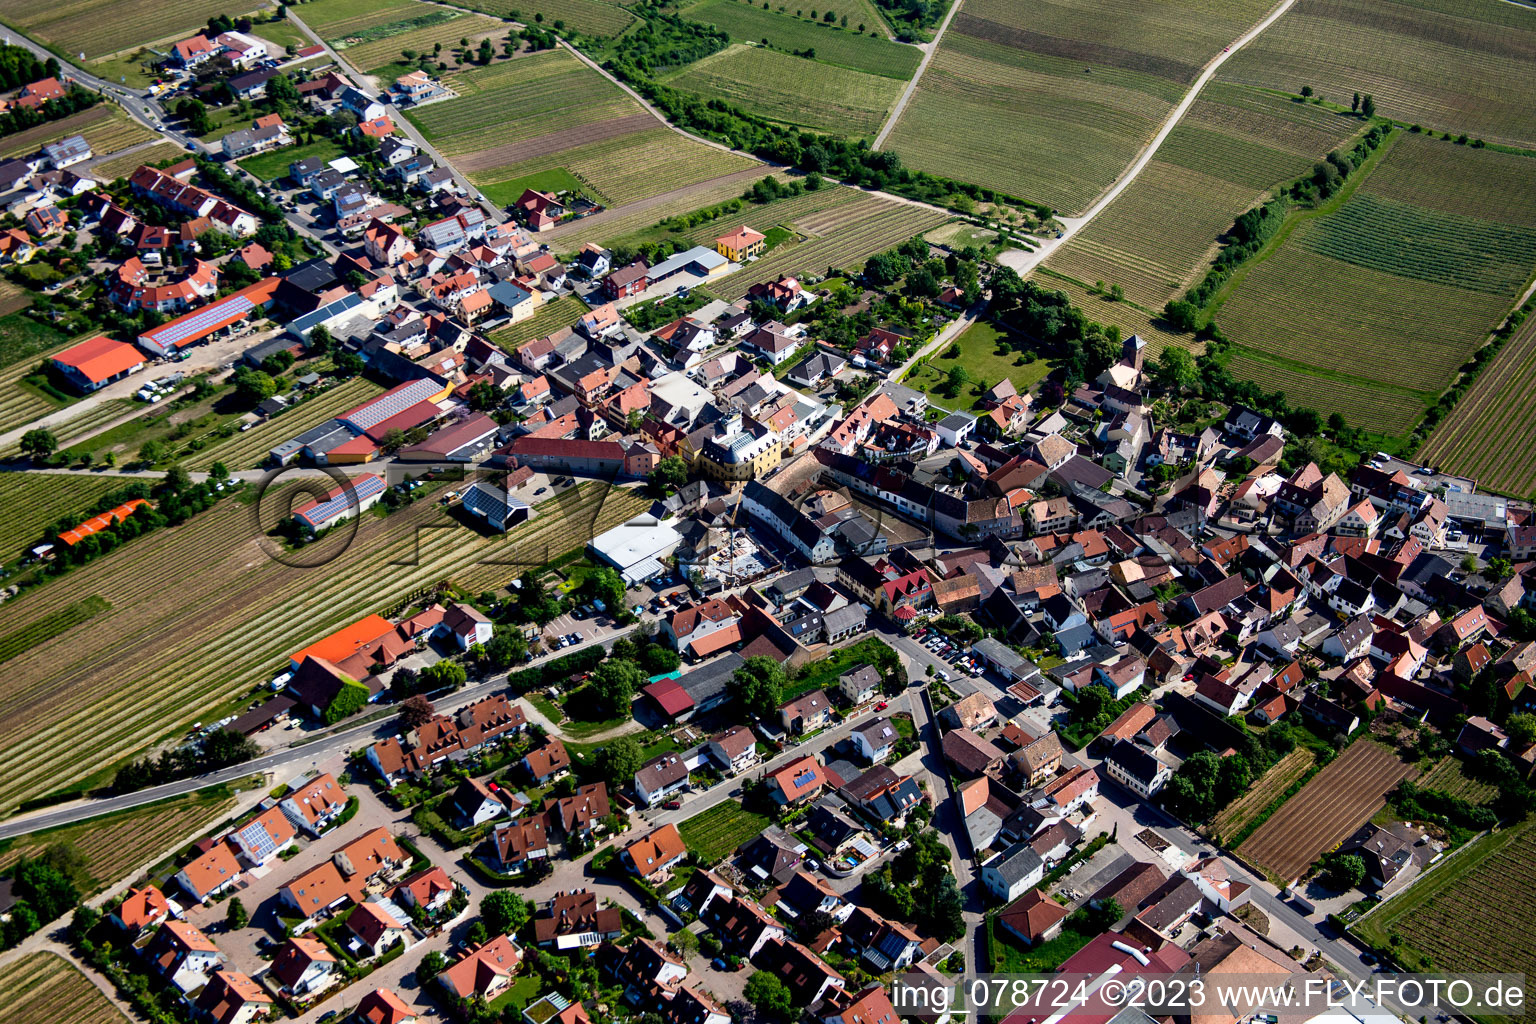 Aerial view of Herxheim am Berg in the state Rhineland-Palatinate, Germany